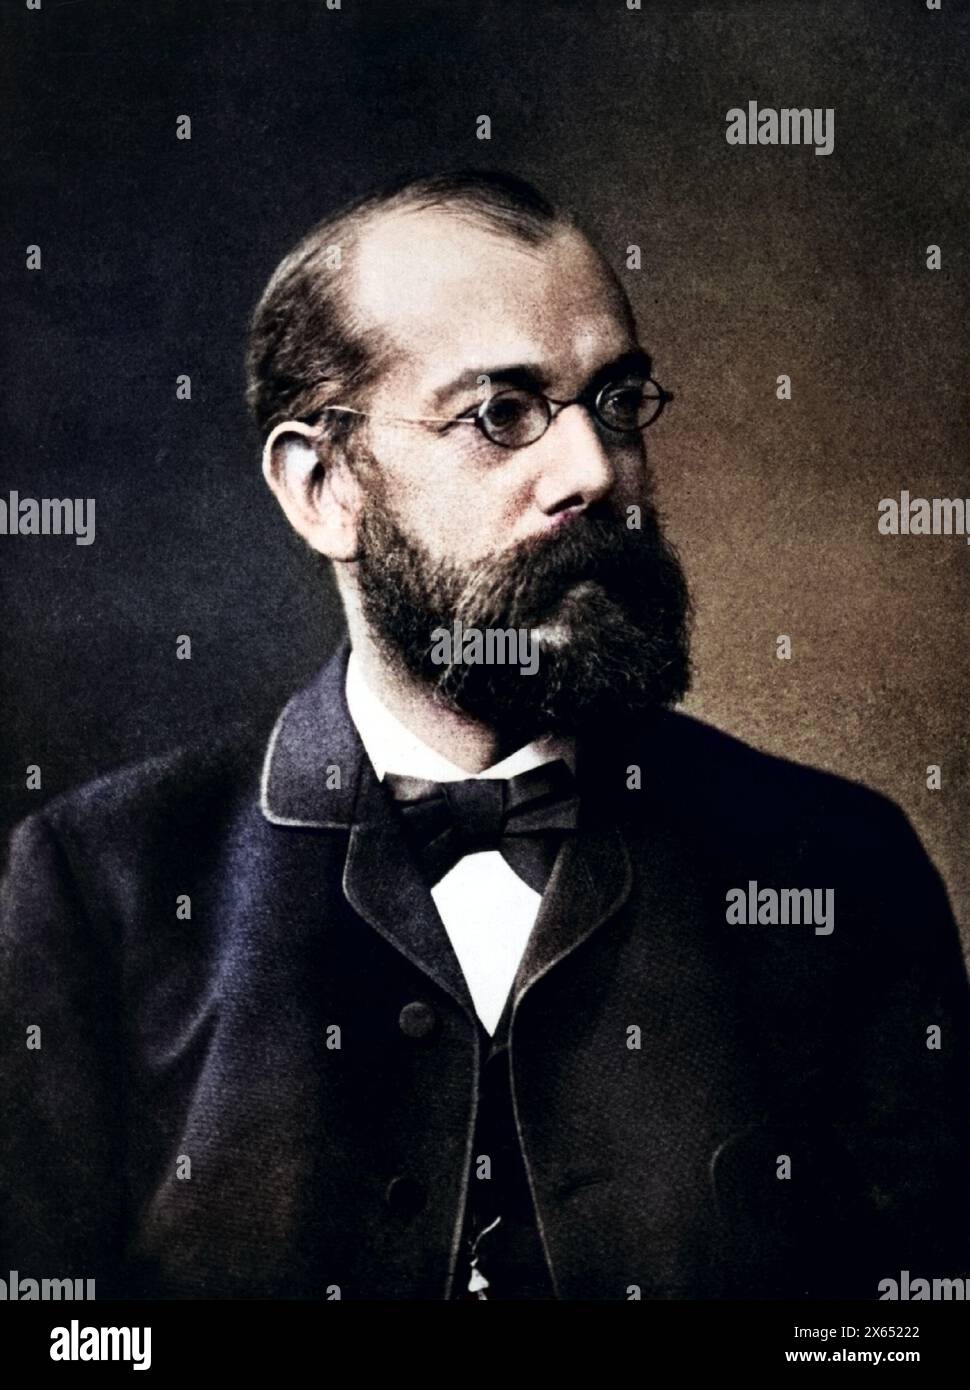 Koch, Robert, 11.12.1843 - 27. 5.1910, German physician, portrait, after photograph by Scharwaechter, ADDITIONAL-RIGHTS-CLEARANCE-INFO-NOT-AVAILABLE Stock Photo